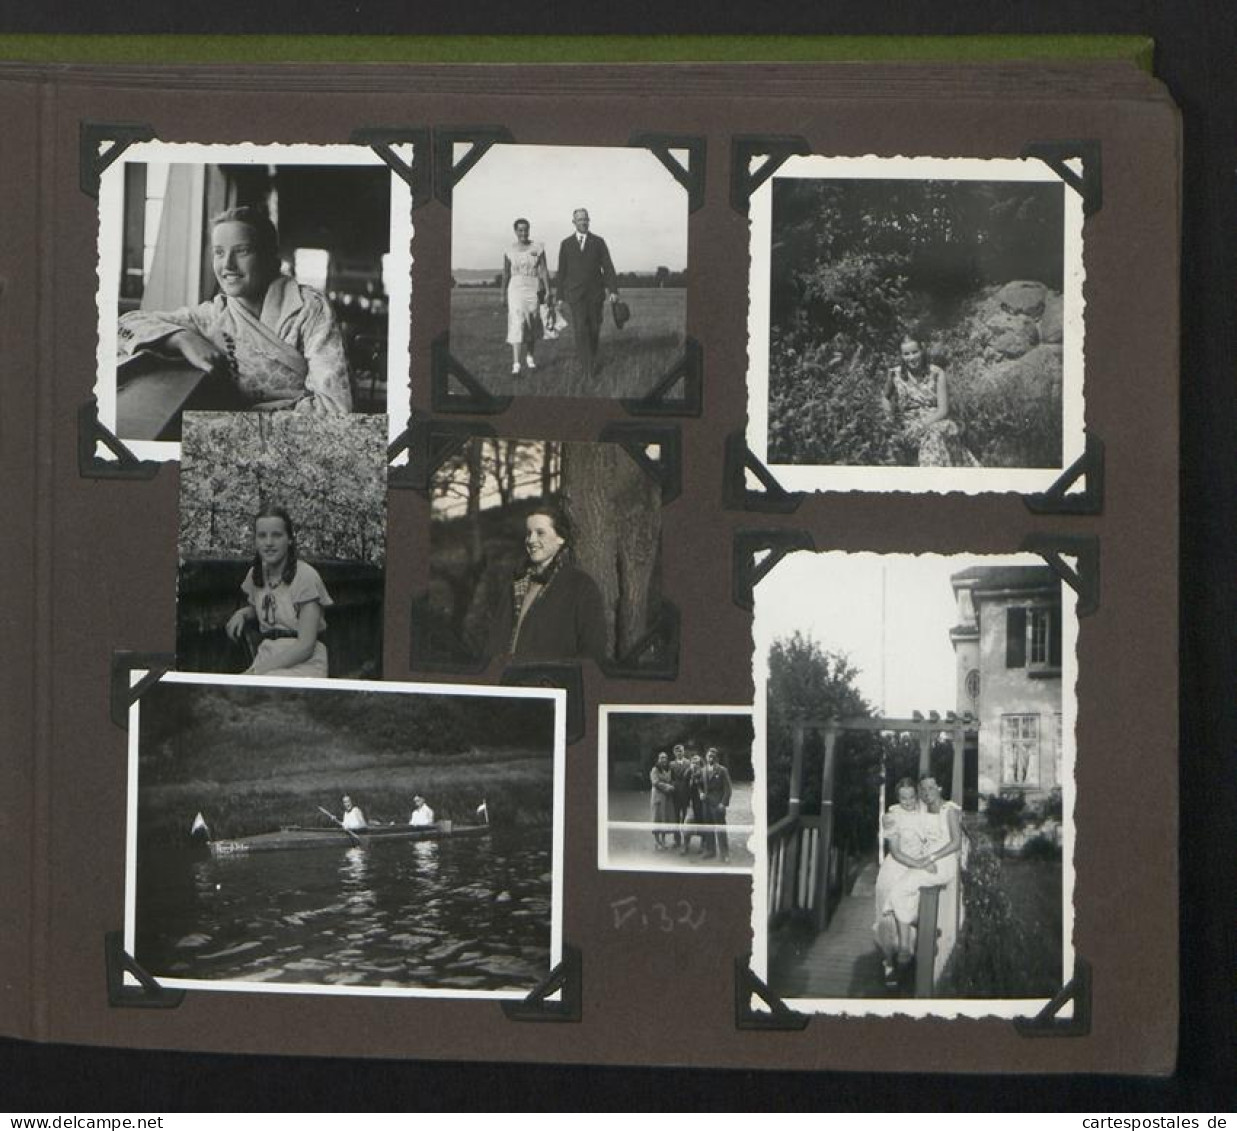 Fotoalbum Mit 150 Fotografien, Giessen Studenten, Theater, Militär, Soldaten, Fussball, Wappen  - Alben & Sammlungen